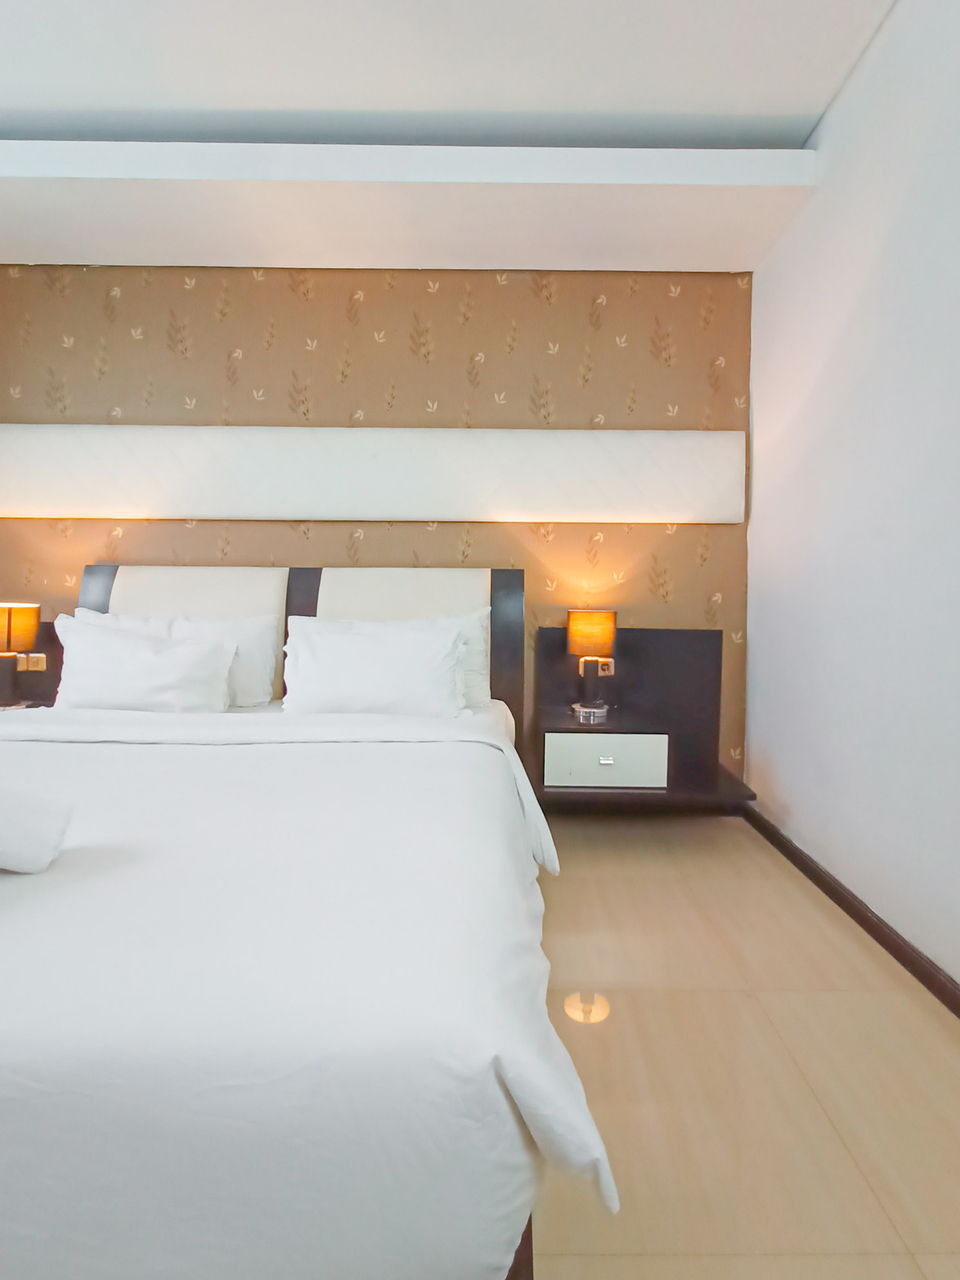 Bedroom 3, Princess Keisha Hotel, Denpasar